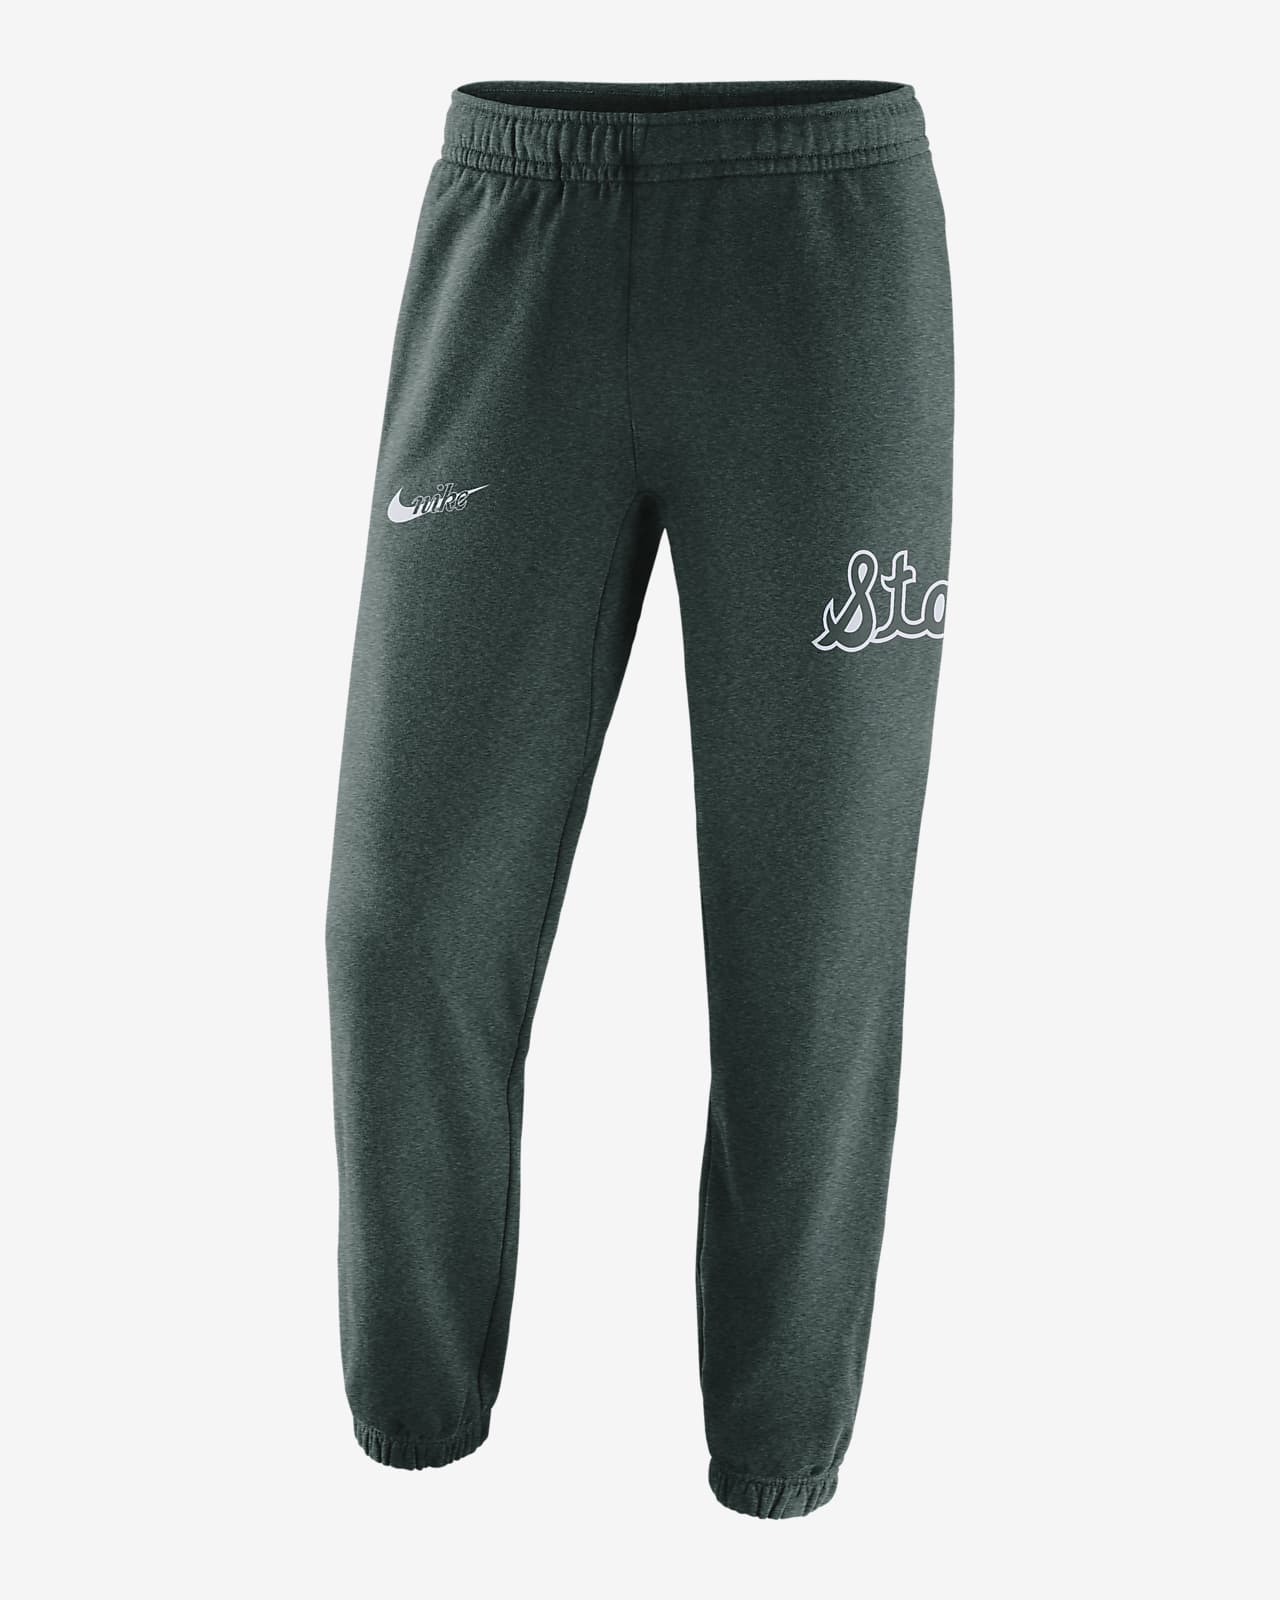 Nike College (Michigan State) Men's Fleece Pants